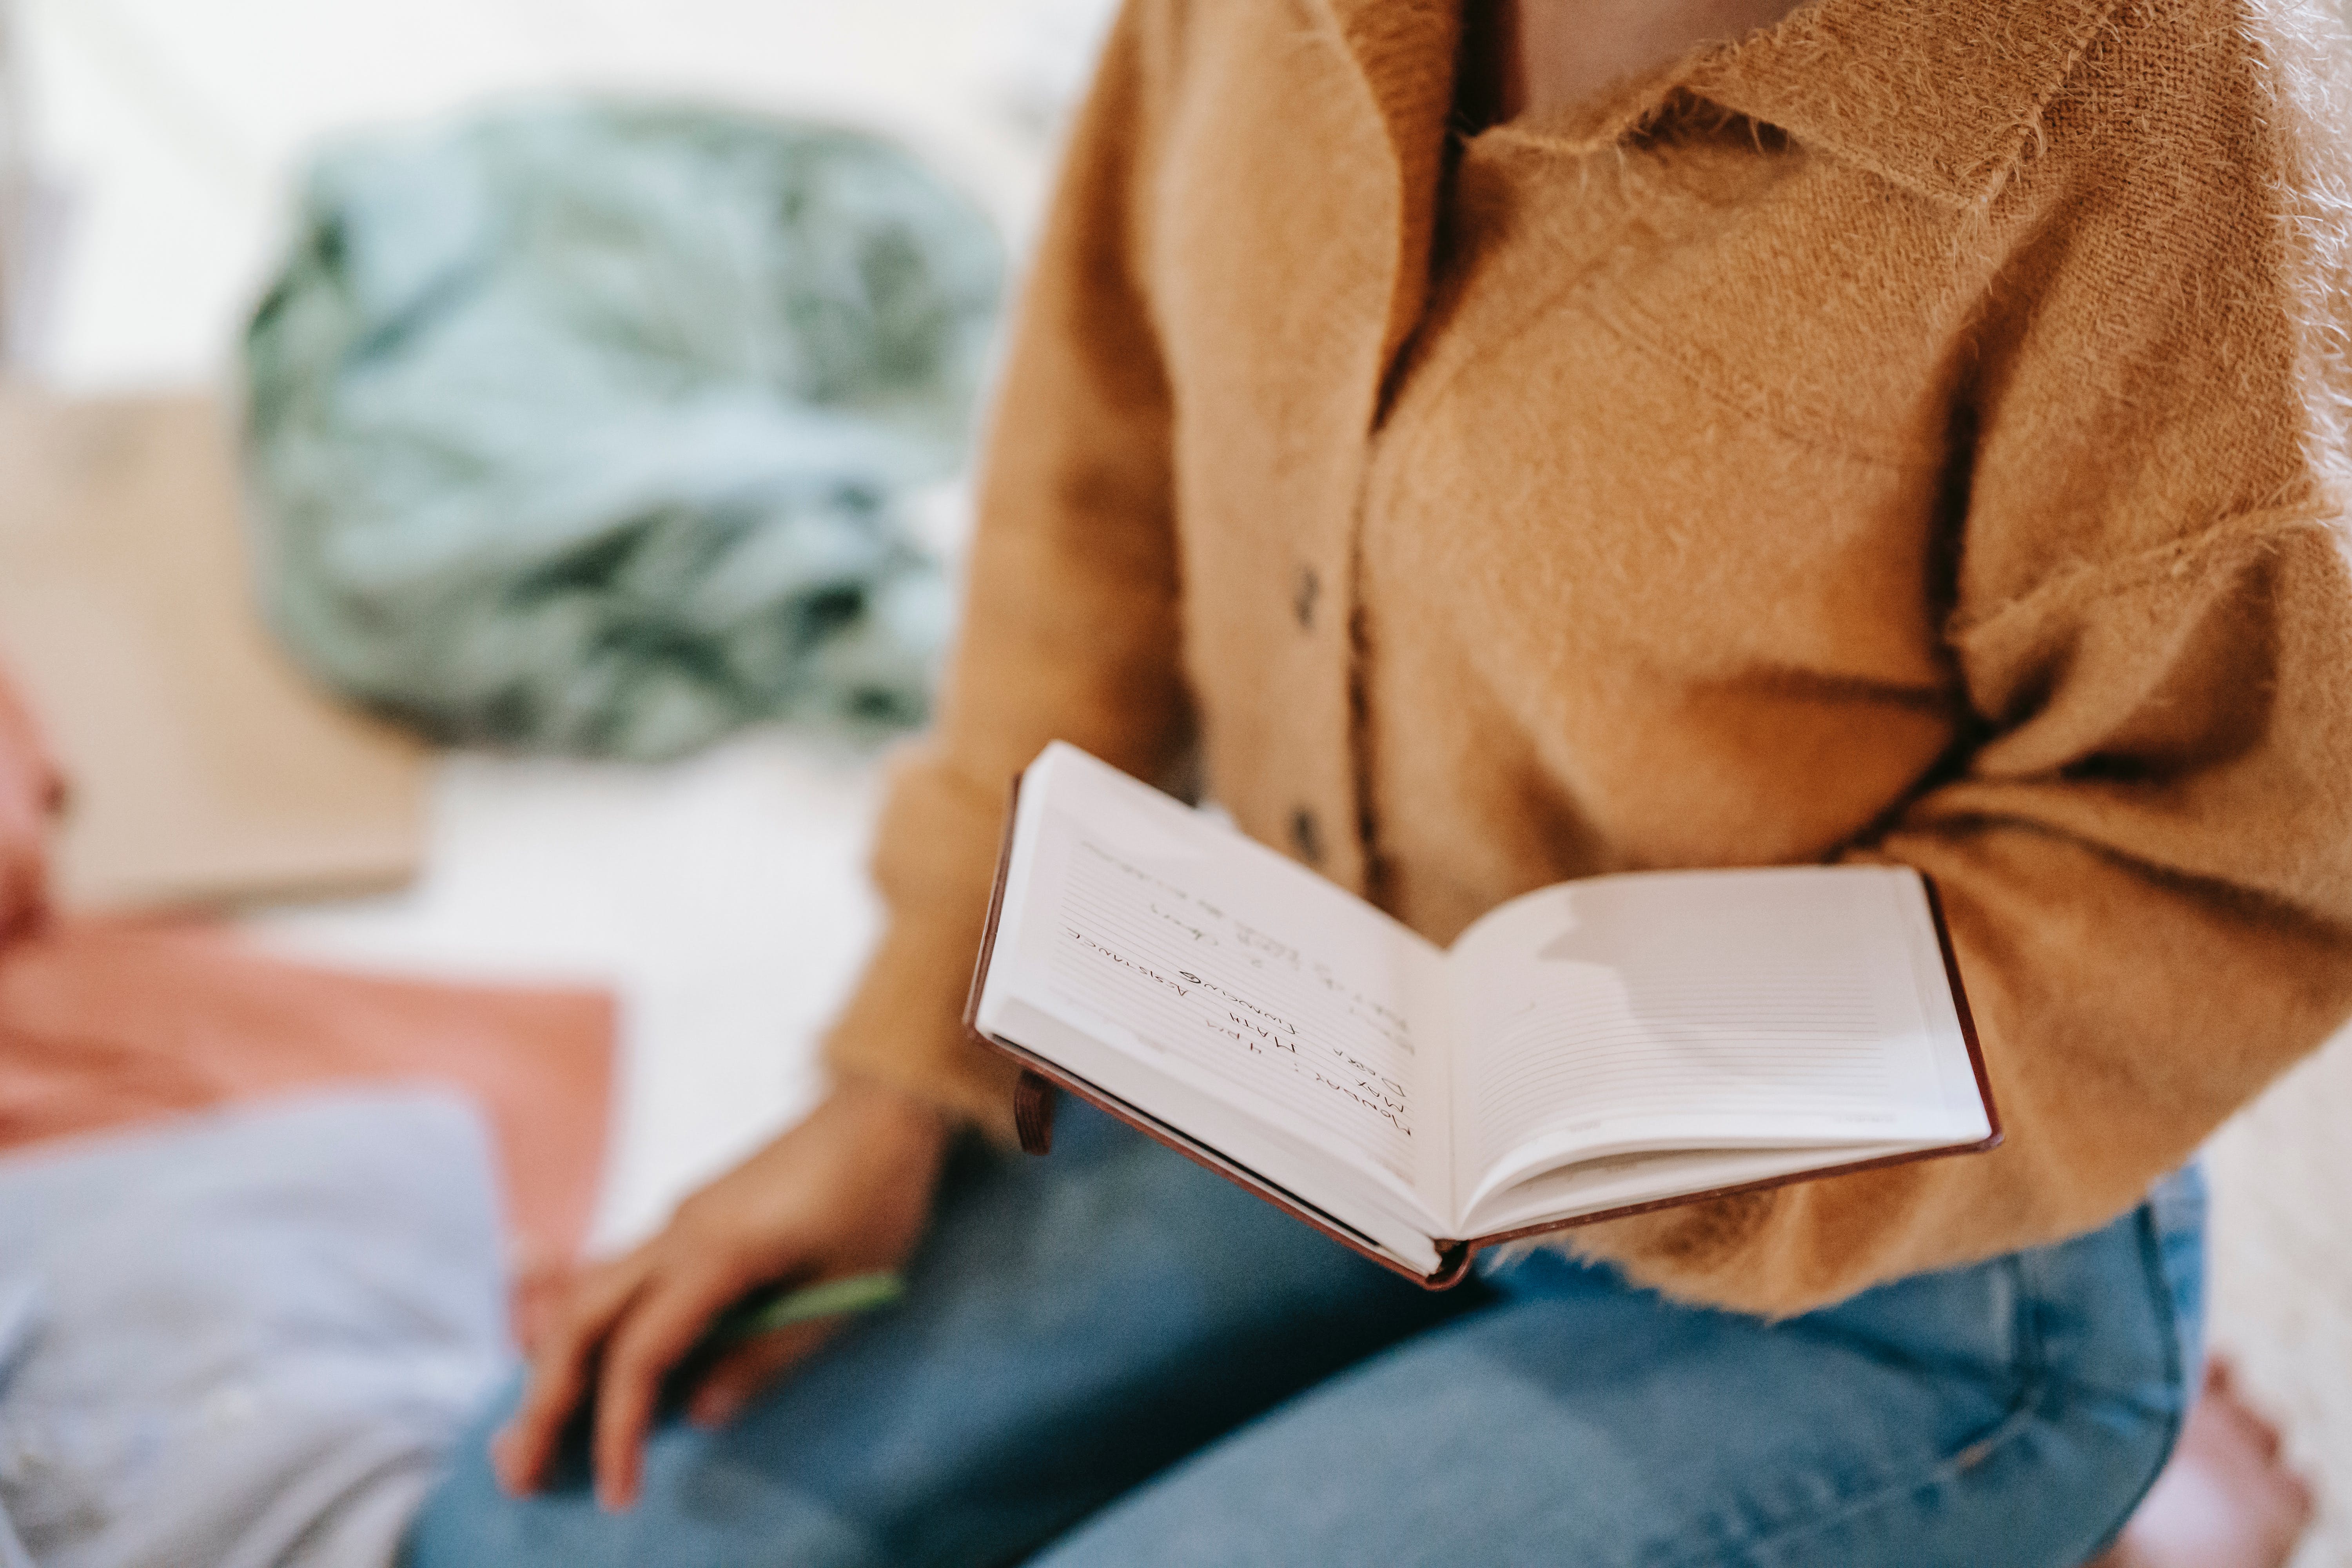 A woman reading through a book | Source: Pexels